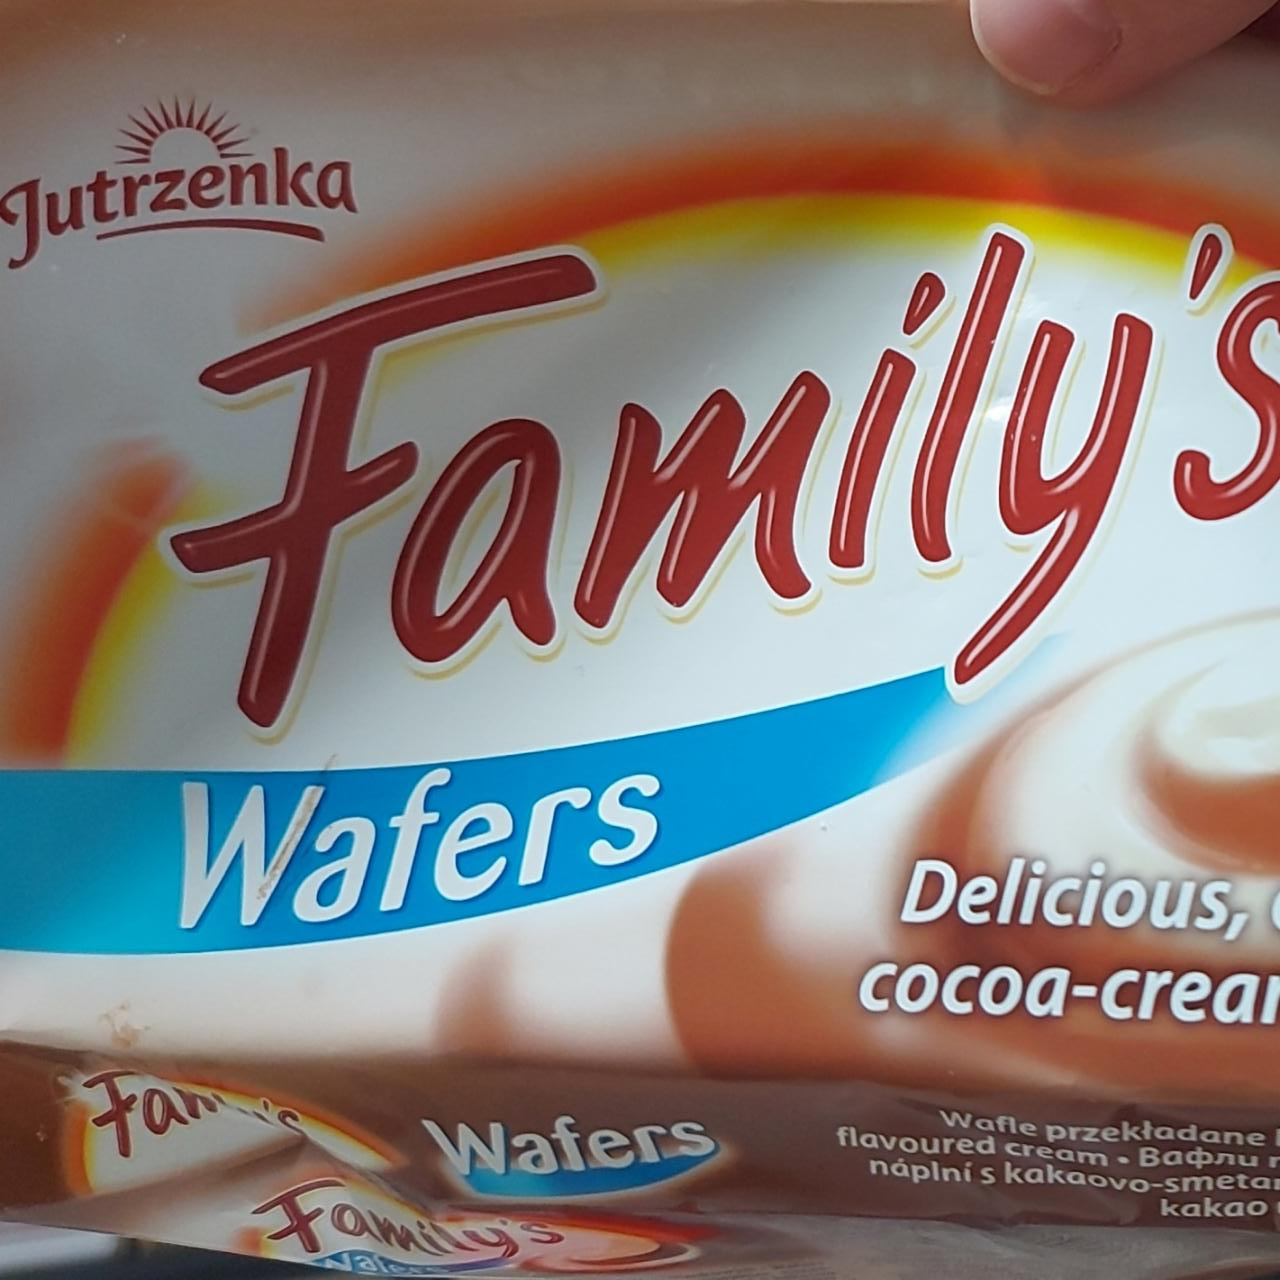 Fotografie - Family's Wafers cocoa-cream Jutrzenka